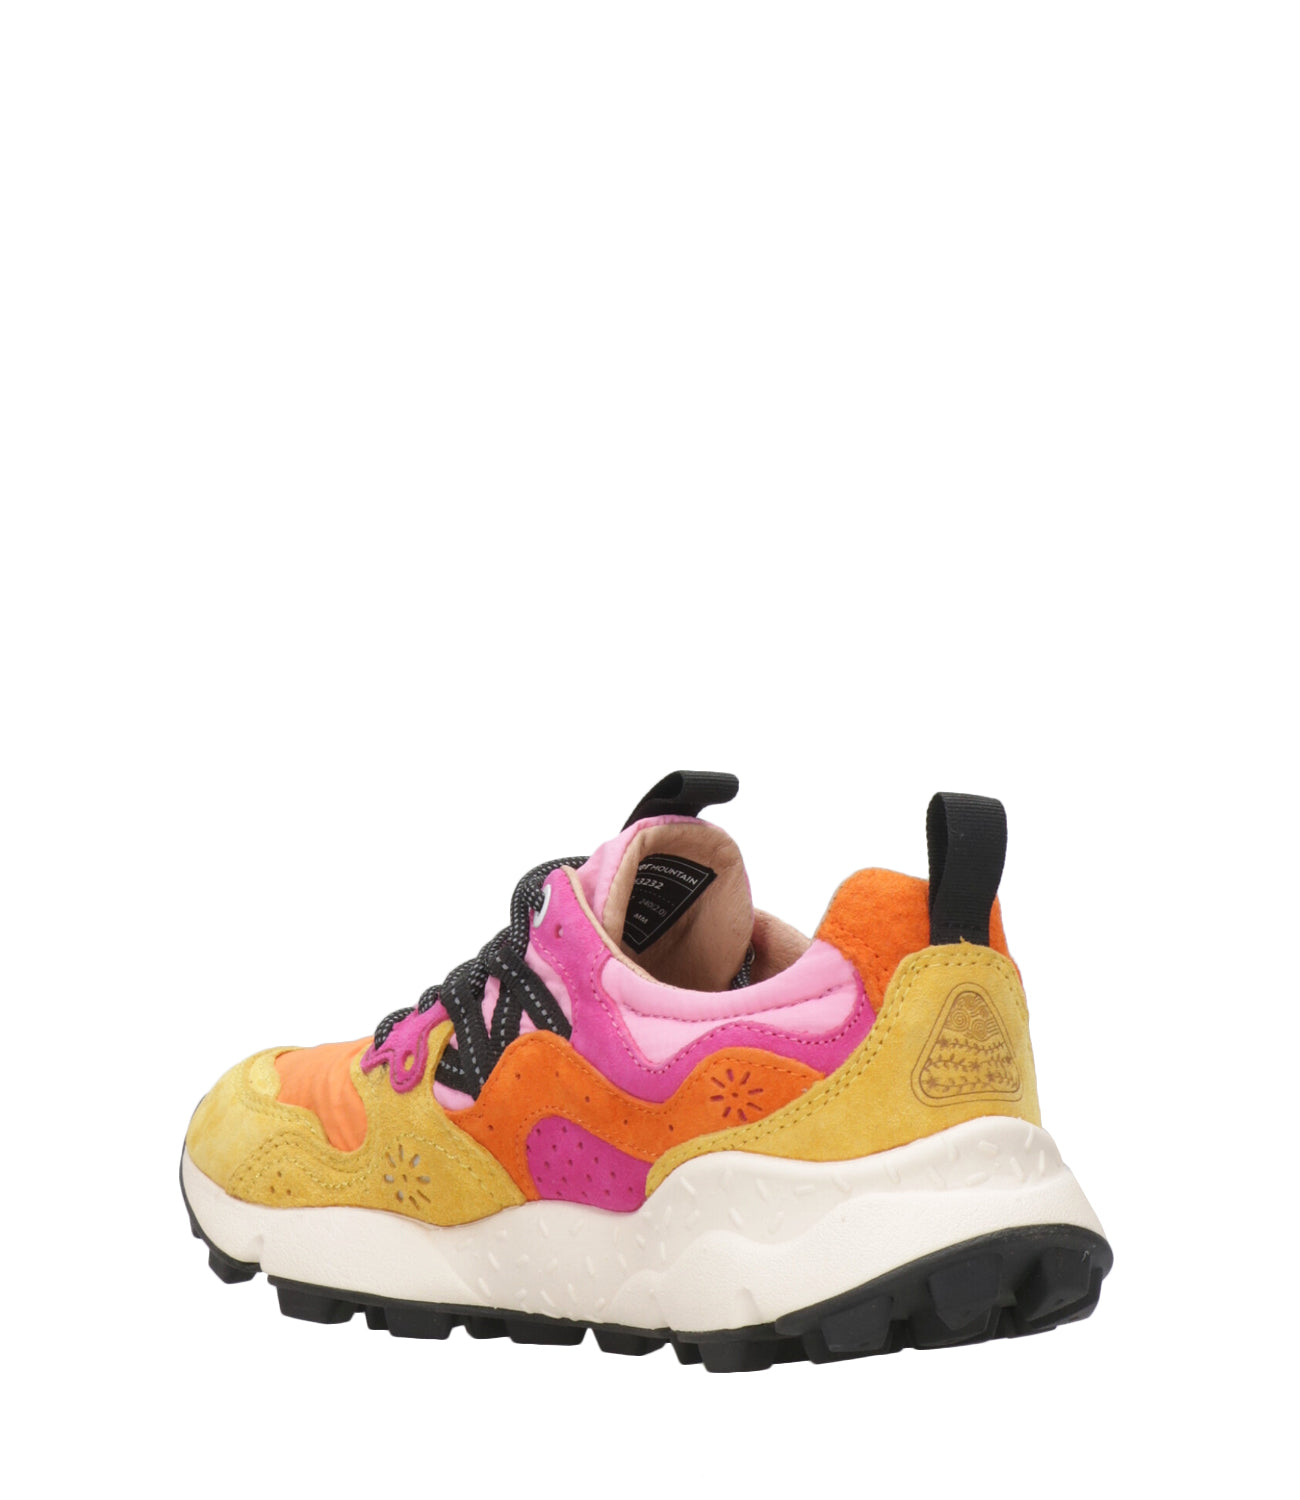 Flower Mountain | Yamano 3 Yellow and Orange Sneakers